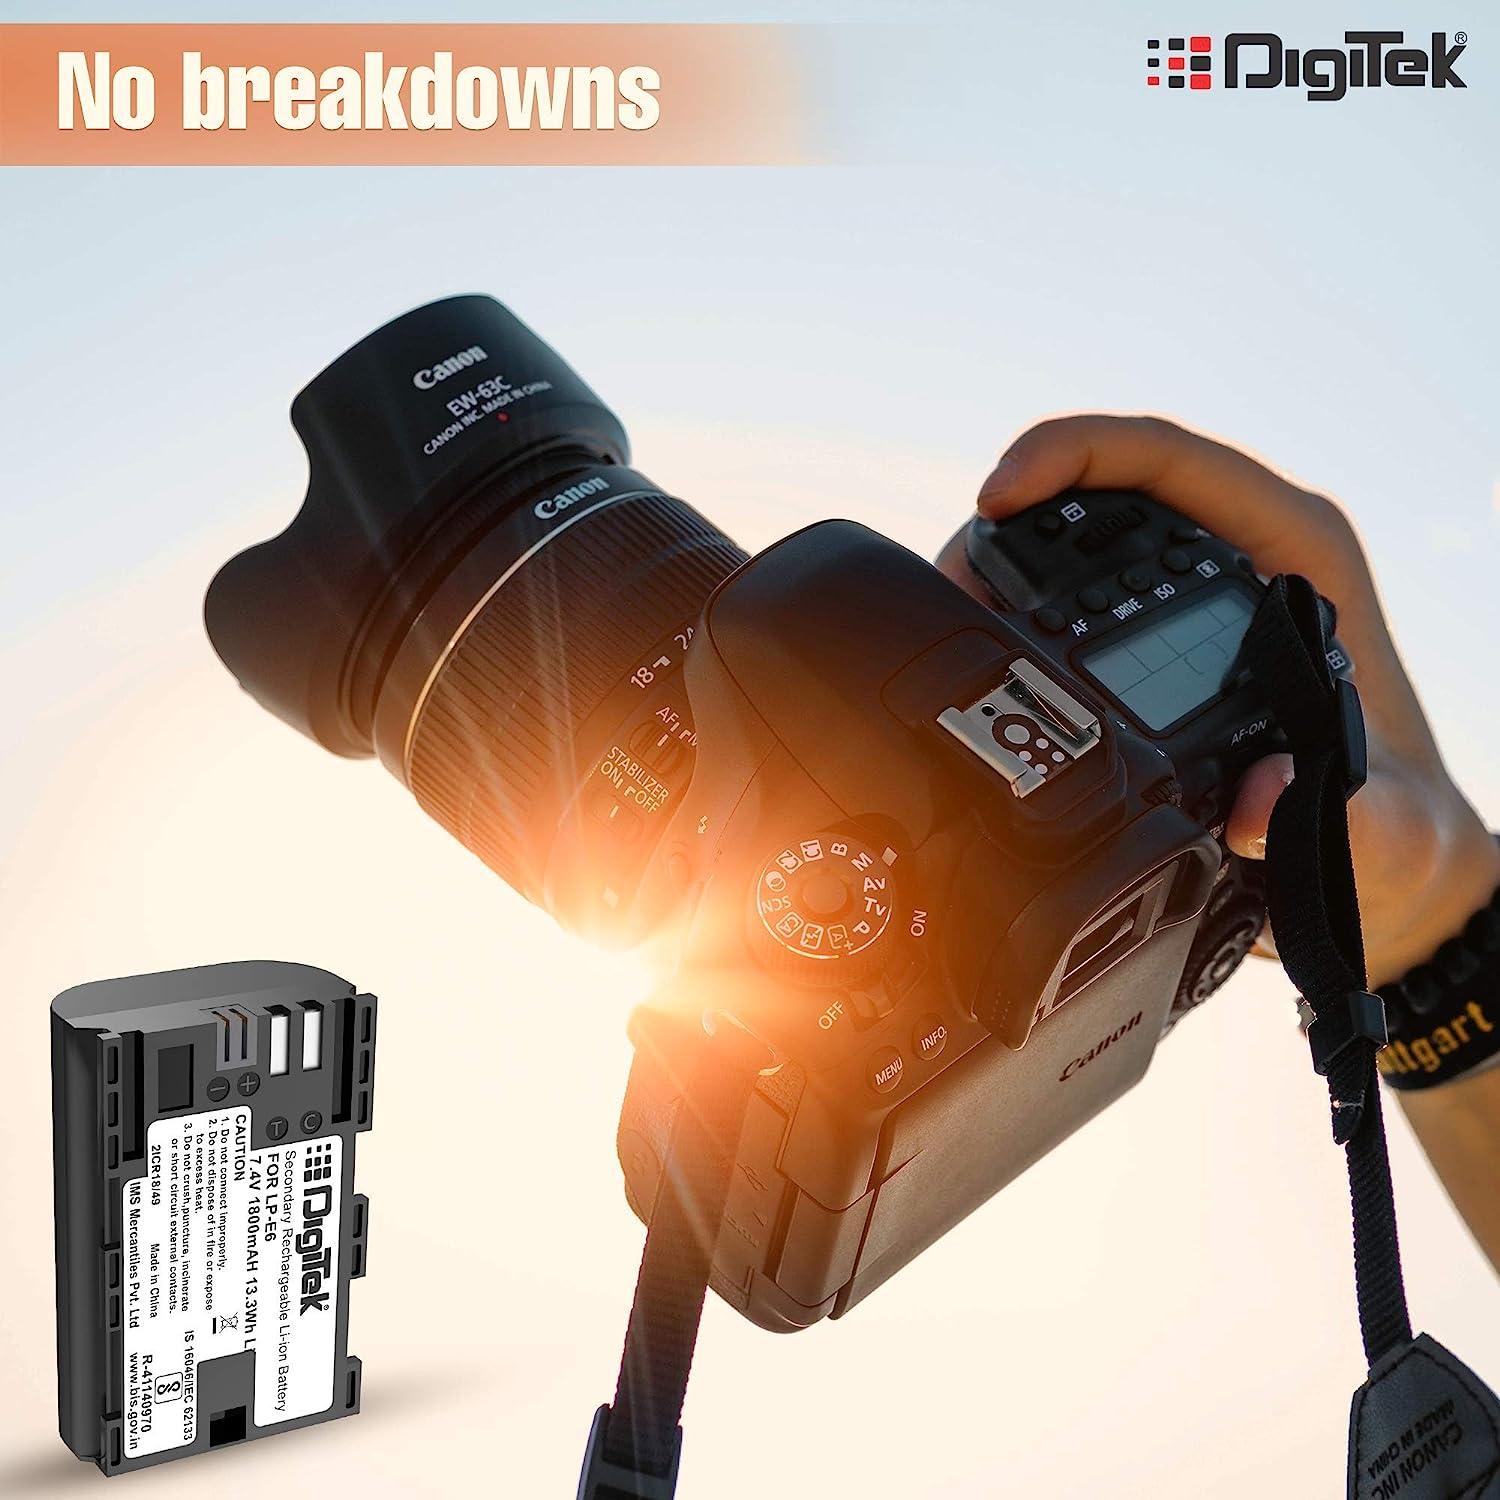 Digitek (LP-E6) Secondary Li-ion Rechargeable Battery for DSLR Camera, Compatibility - EOS 5D Mark IV, EOS 5Ds, 5DS R, EOS 6D, EOS 6D Mark II, EOS 7D, EOS 7D Mark II and More - Digitek